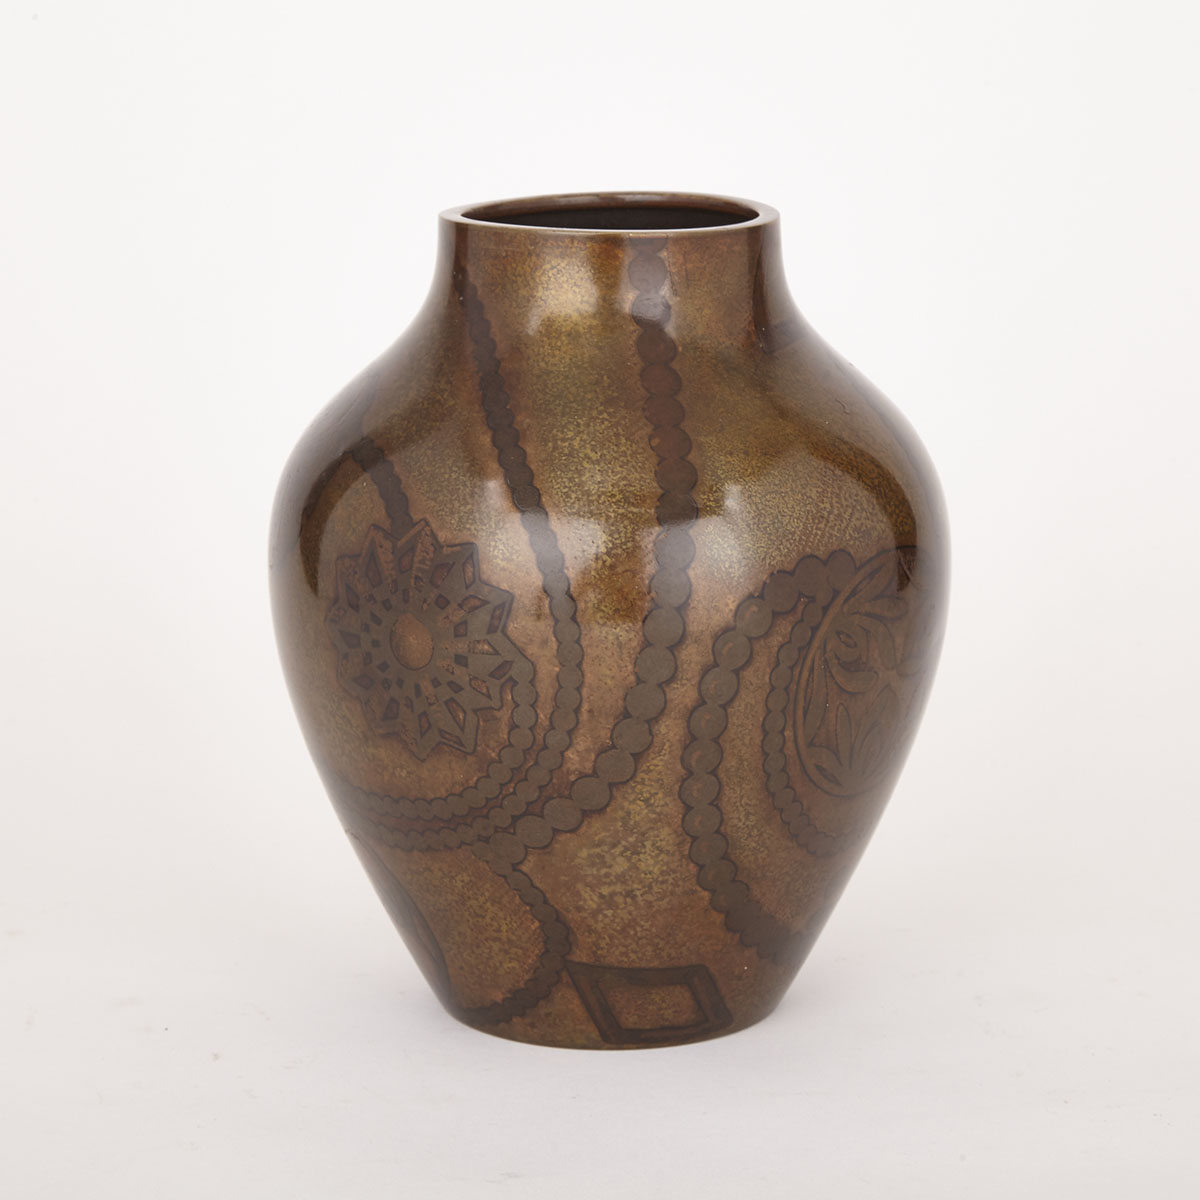 WMF (Wurttembergische Metallwarenfabrik) ‘Ikora’ Spun and Lacquered Brass Vase, c.1930